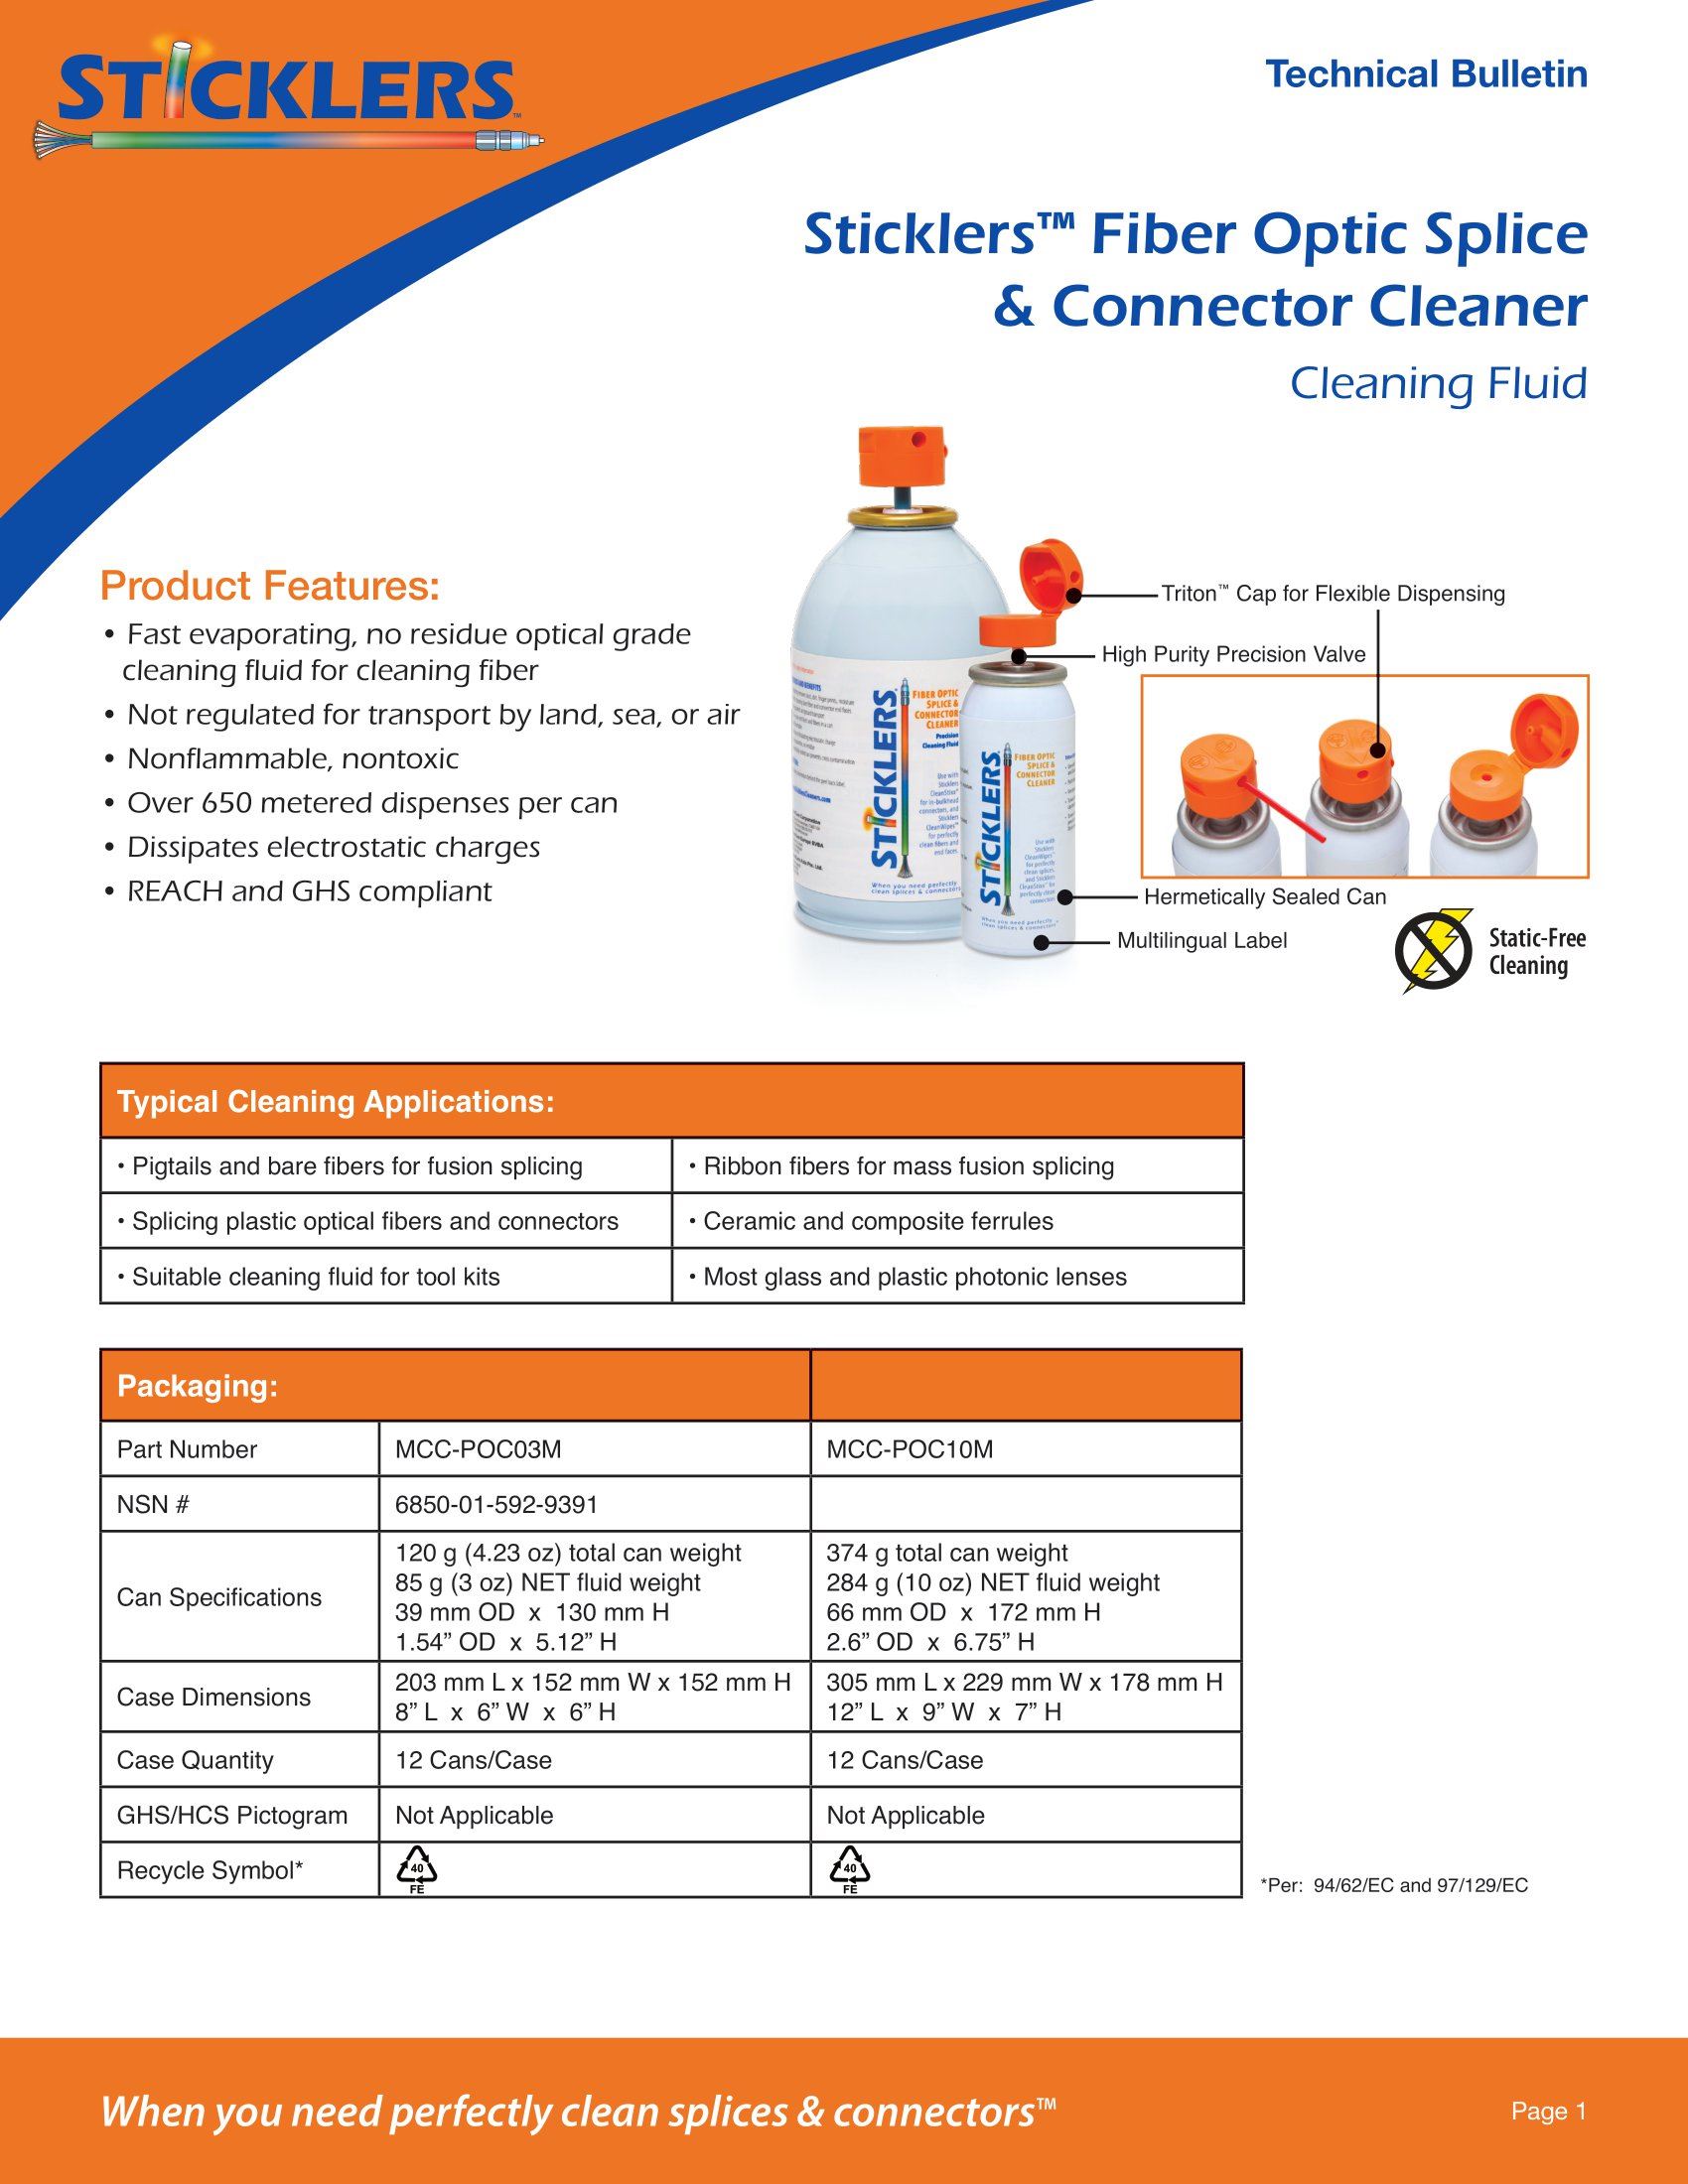 MCC-POC10M Fibre Optic Splice & Connector Cleaner 284g (10oz)